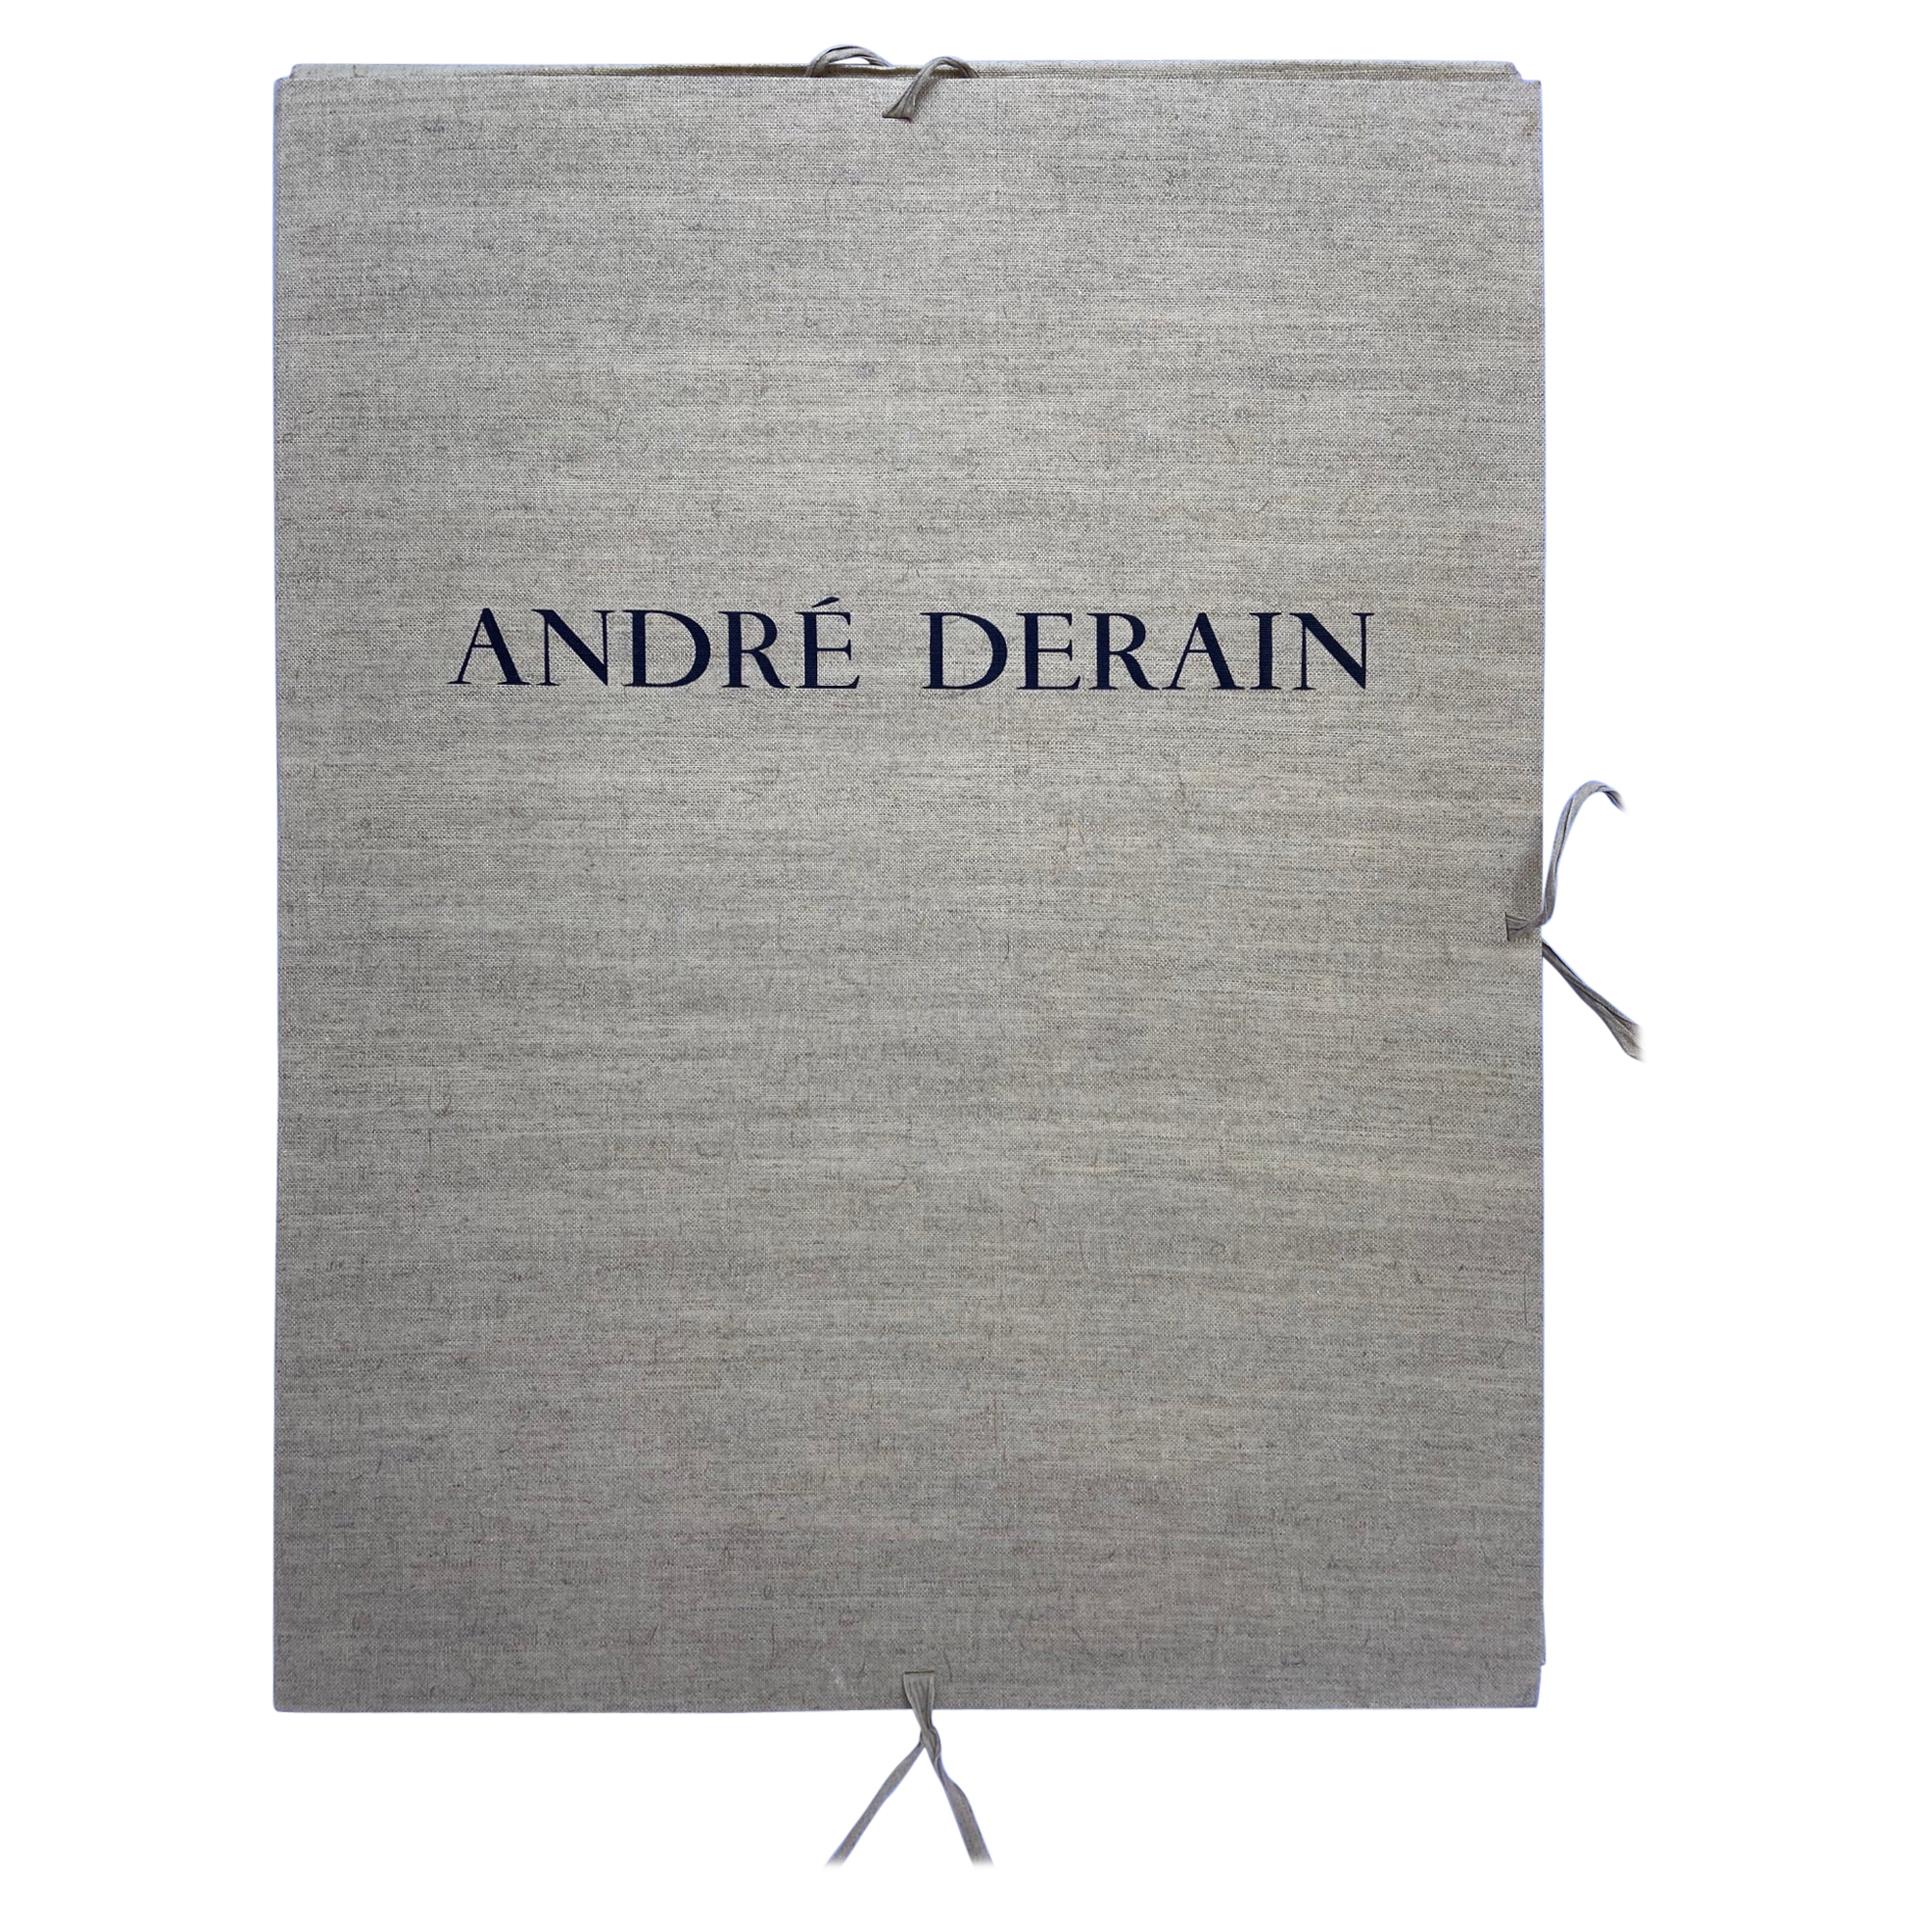  André Derain, Canvas Portfolio, Pierre Levy Collection, 1970